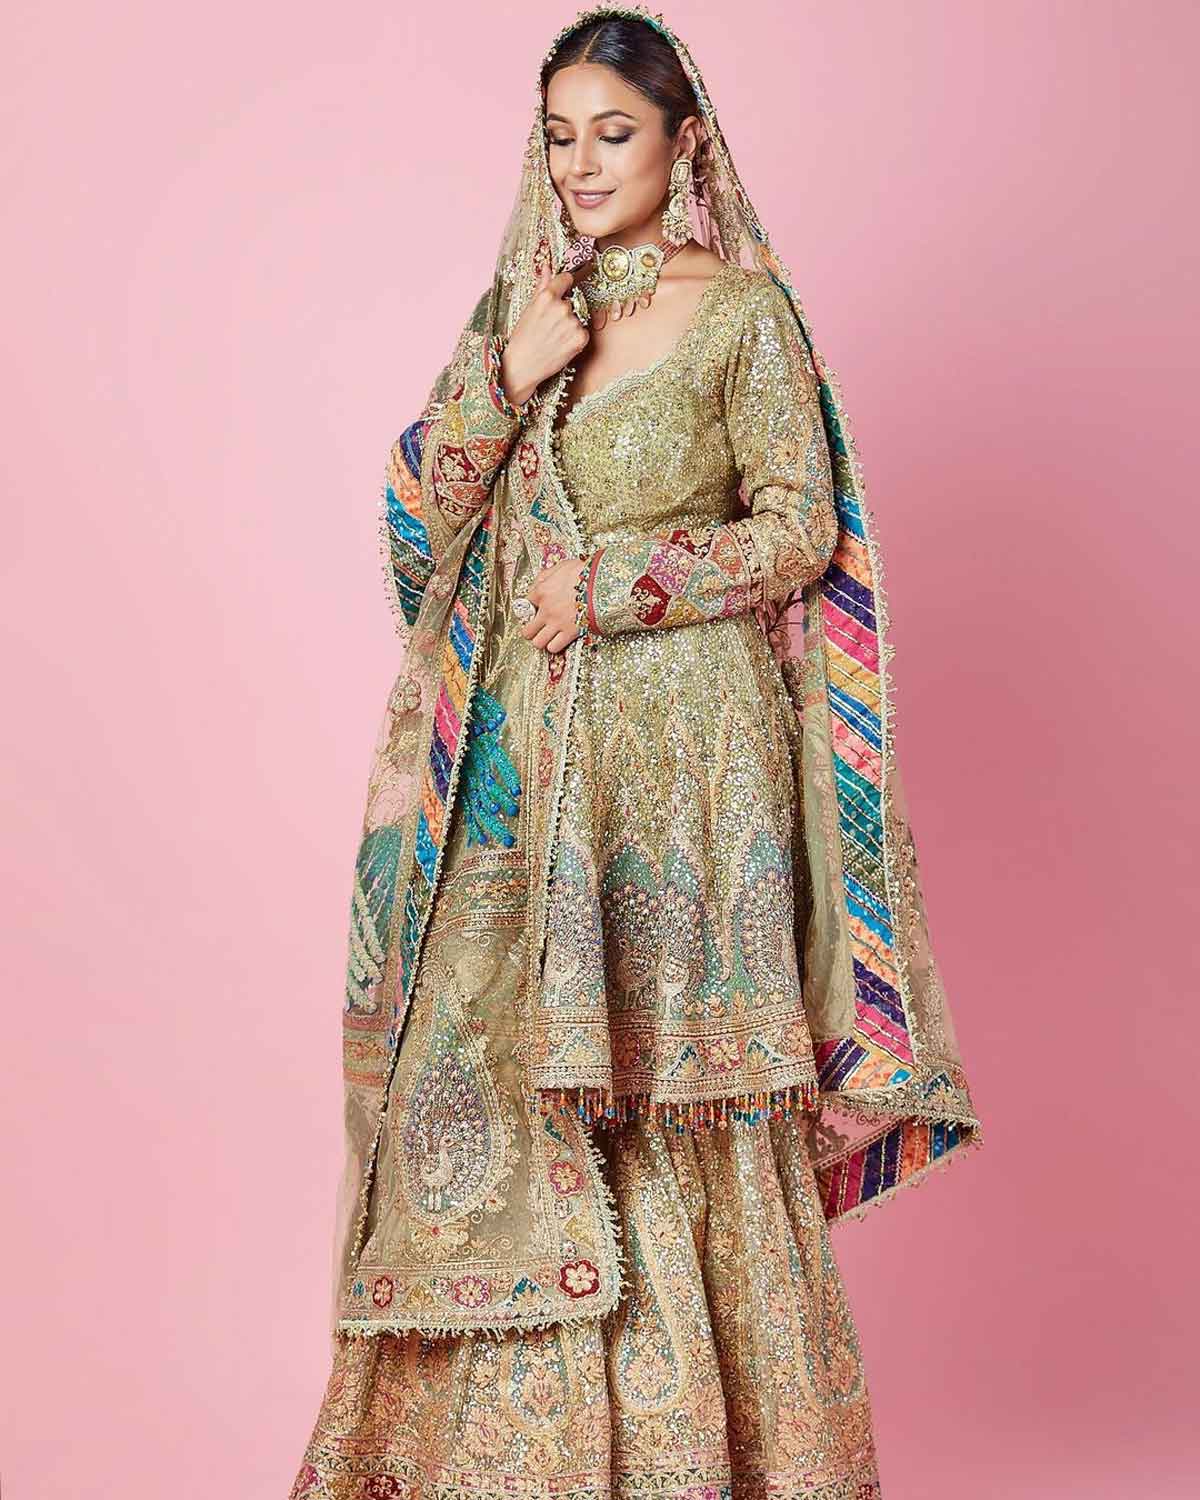 Muslim Bridal Look | ब्राइडल लहंगा टिप्स | Bridal Look Tips | outfit ideas for muslim bridal look | HerZindagi